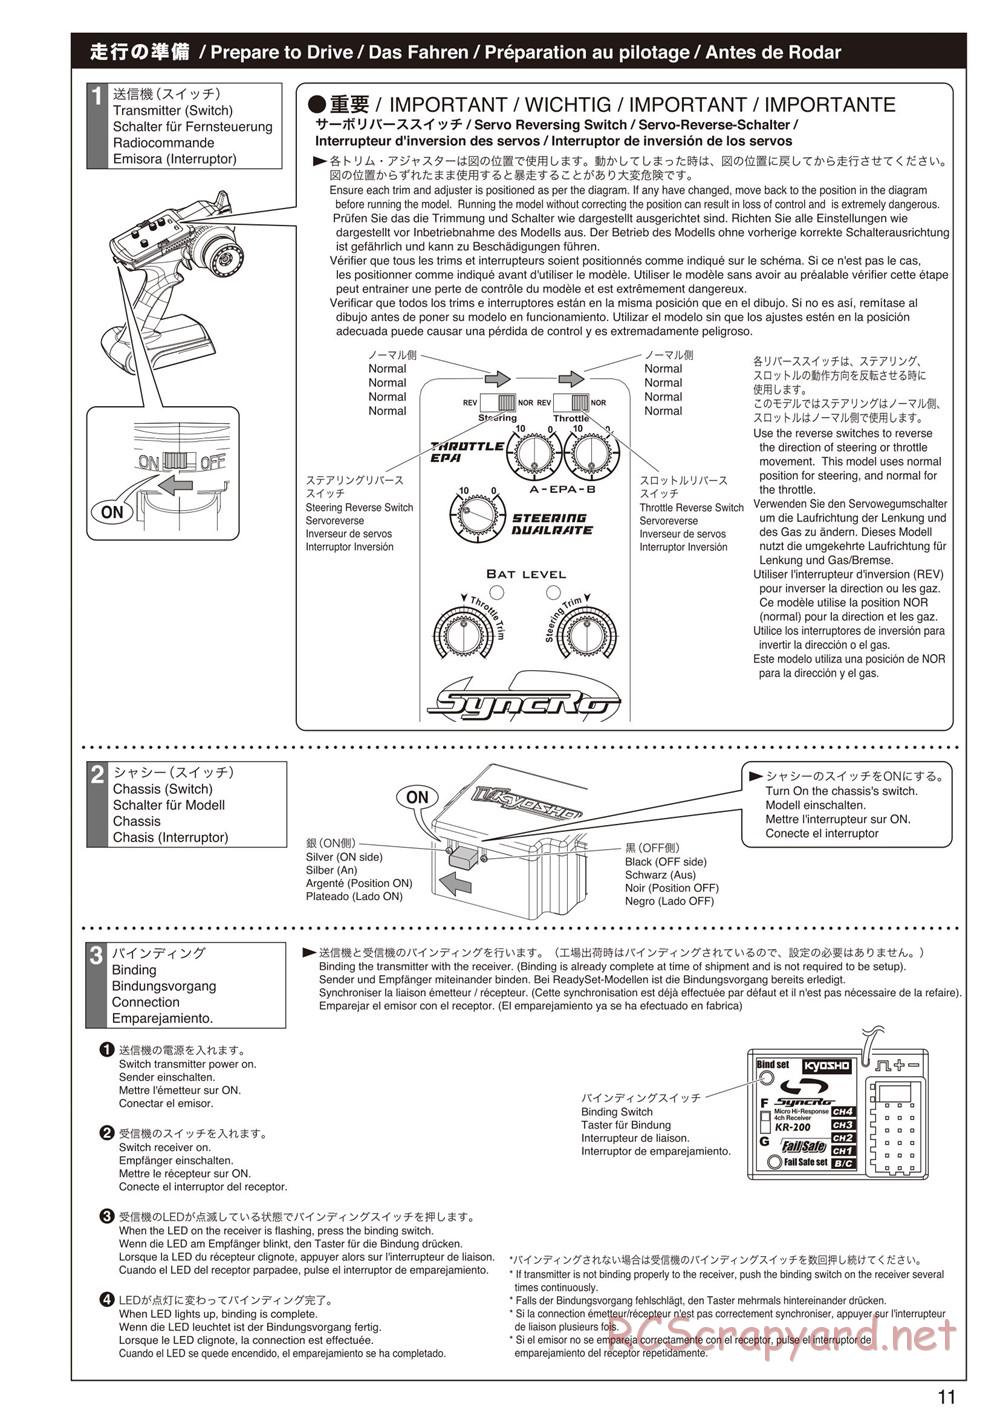 Kyosho - FO-XX GP - Manual - Page 11